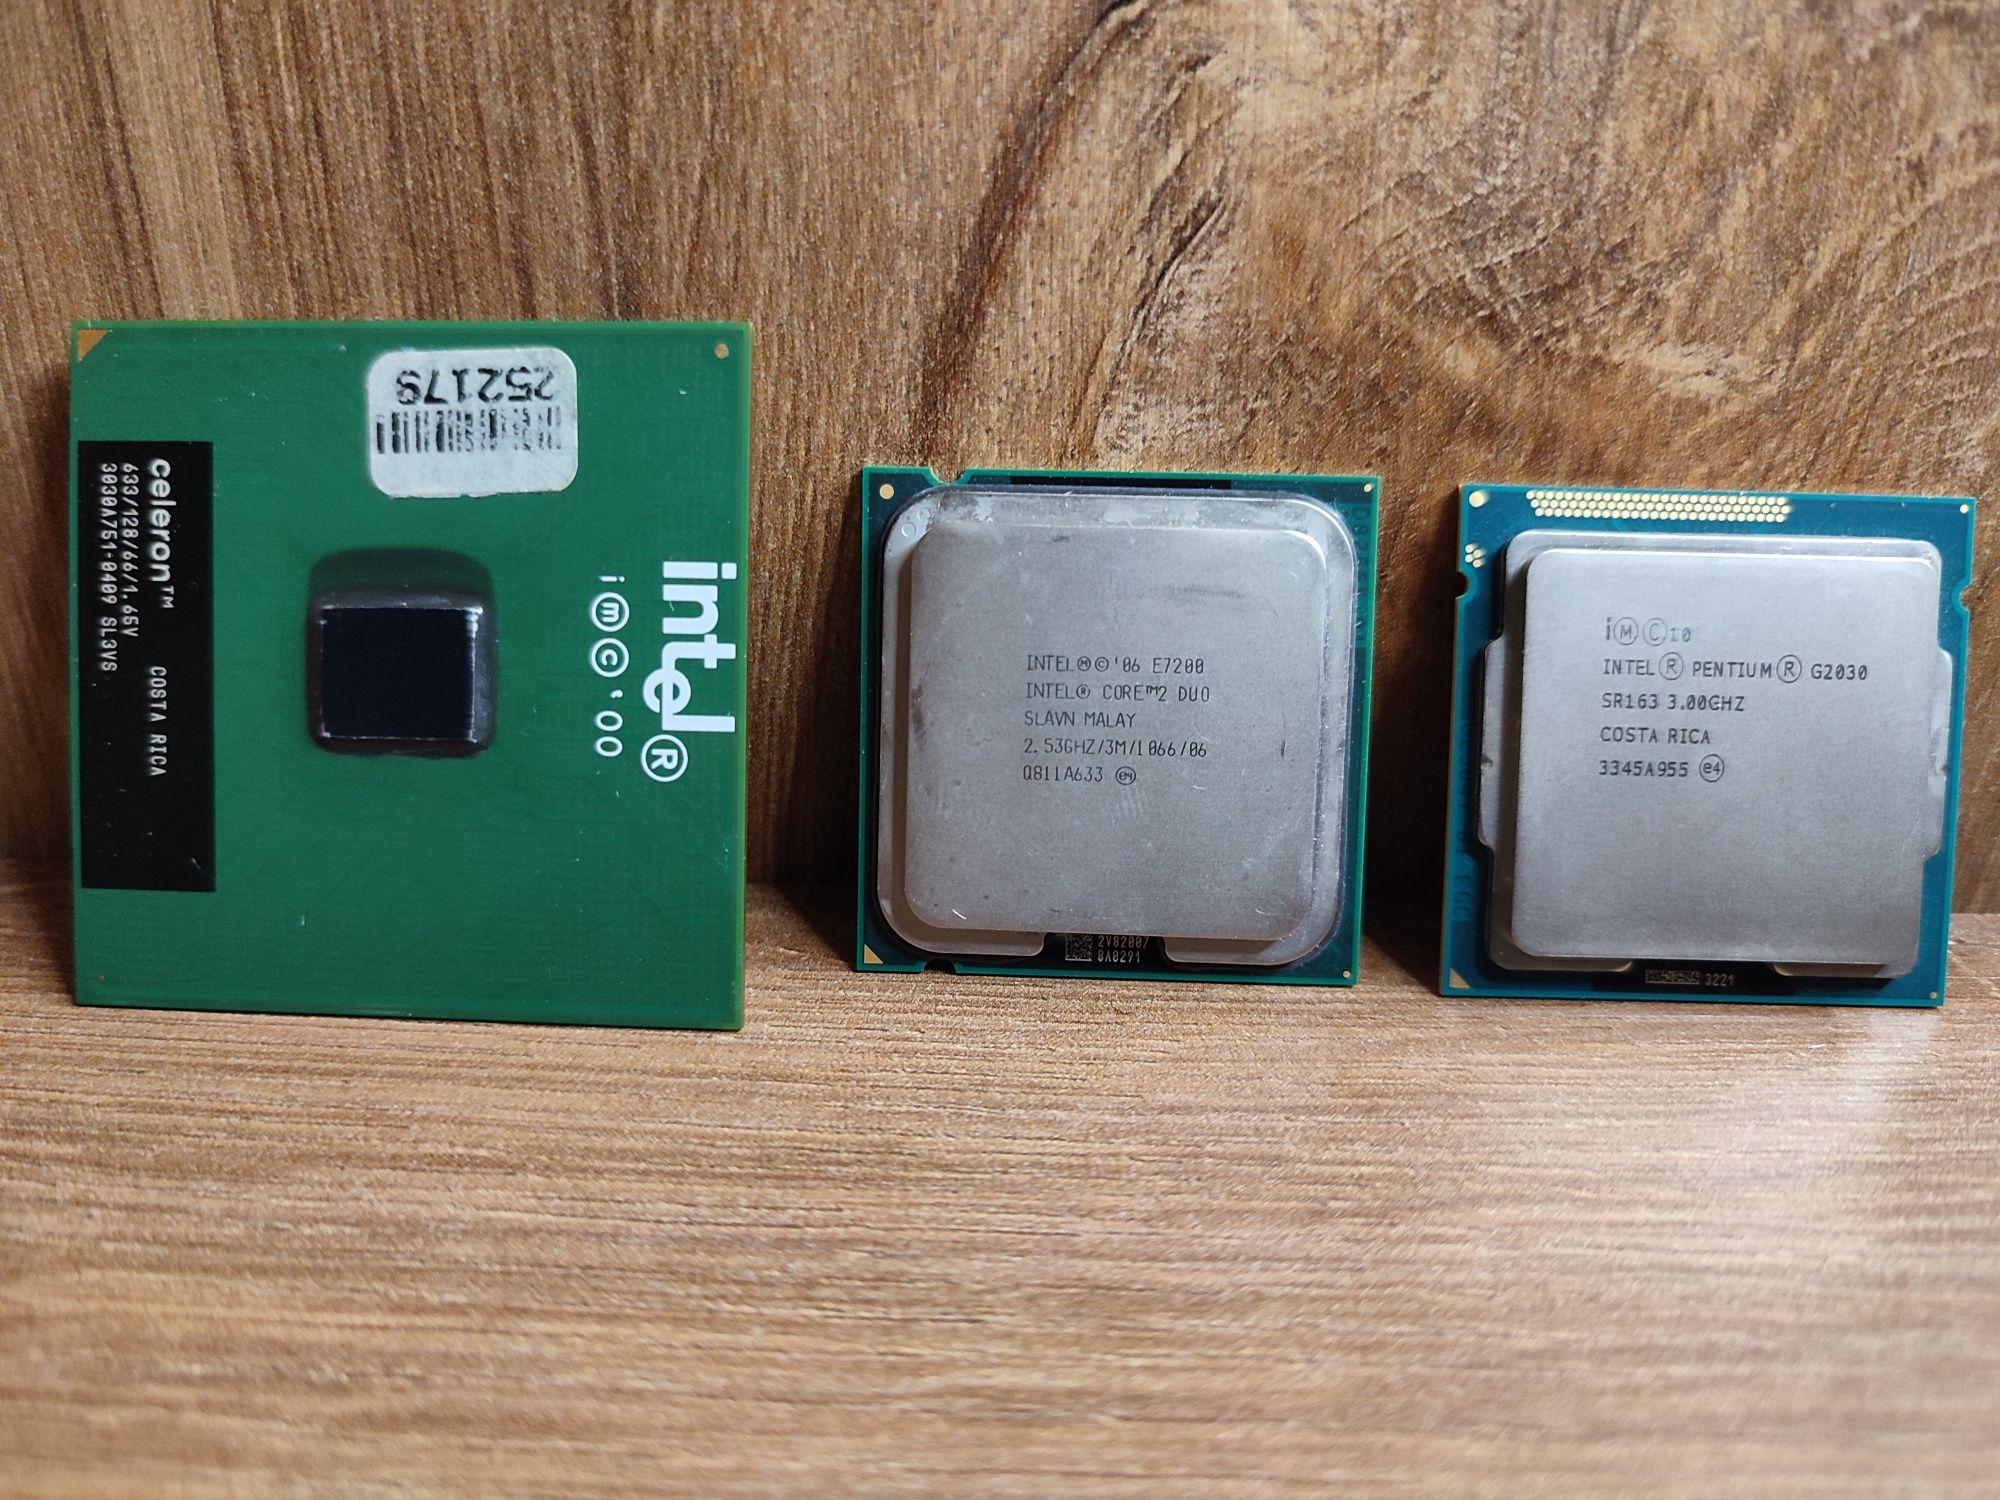 Процессор Intel E7200 Intel Core 2 Duo 2,53 ghz Pentium G2030 3,00 ghz